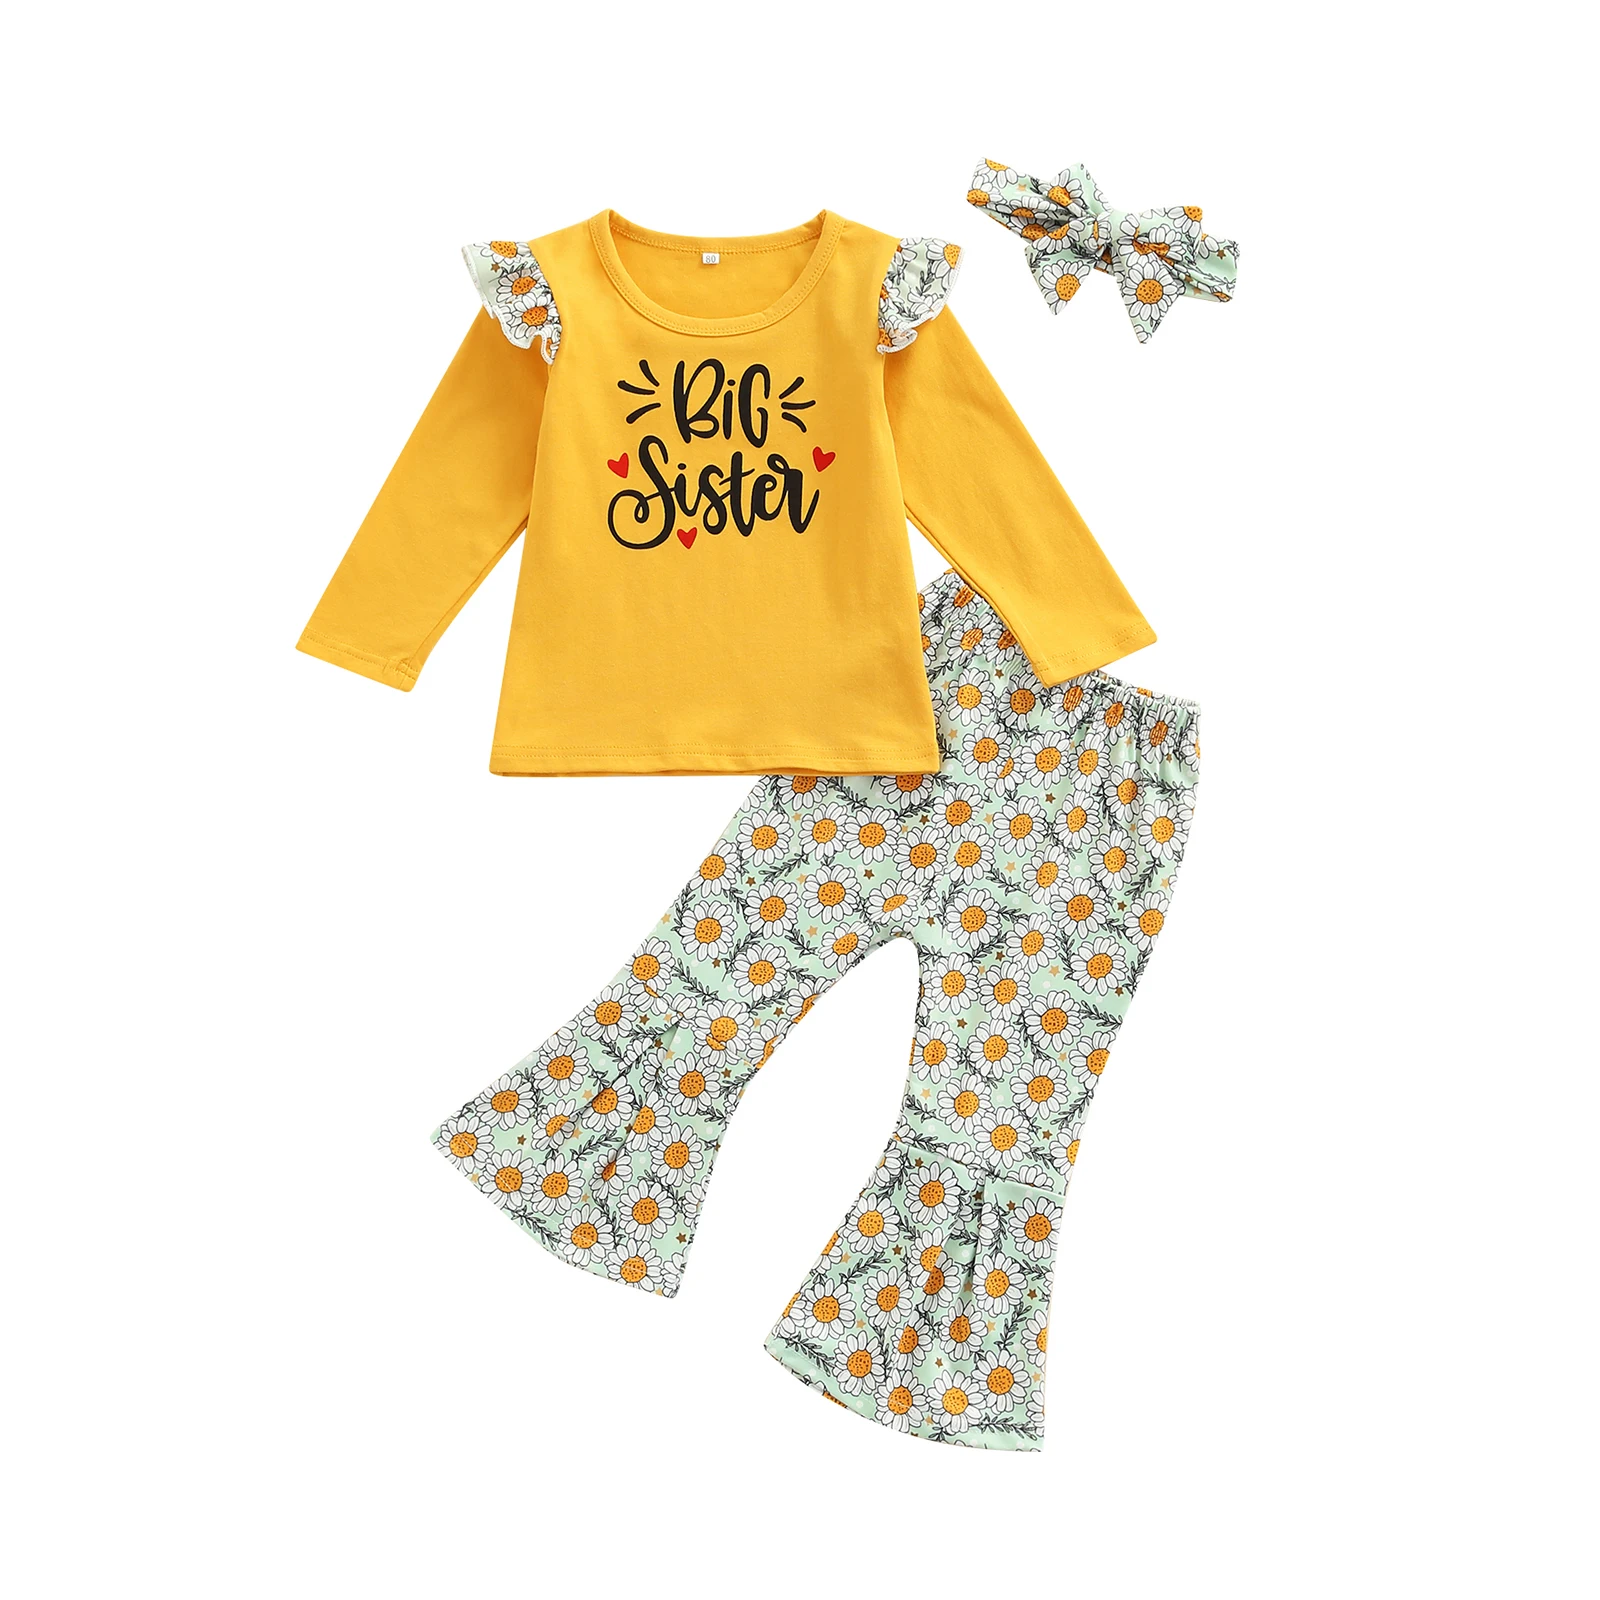 Lioraitiin-ropa de tres piezas para niña, Tops de manga larga con letras de moda y pantalones acampanados de girasol con diadema